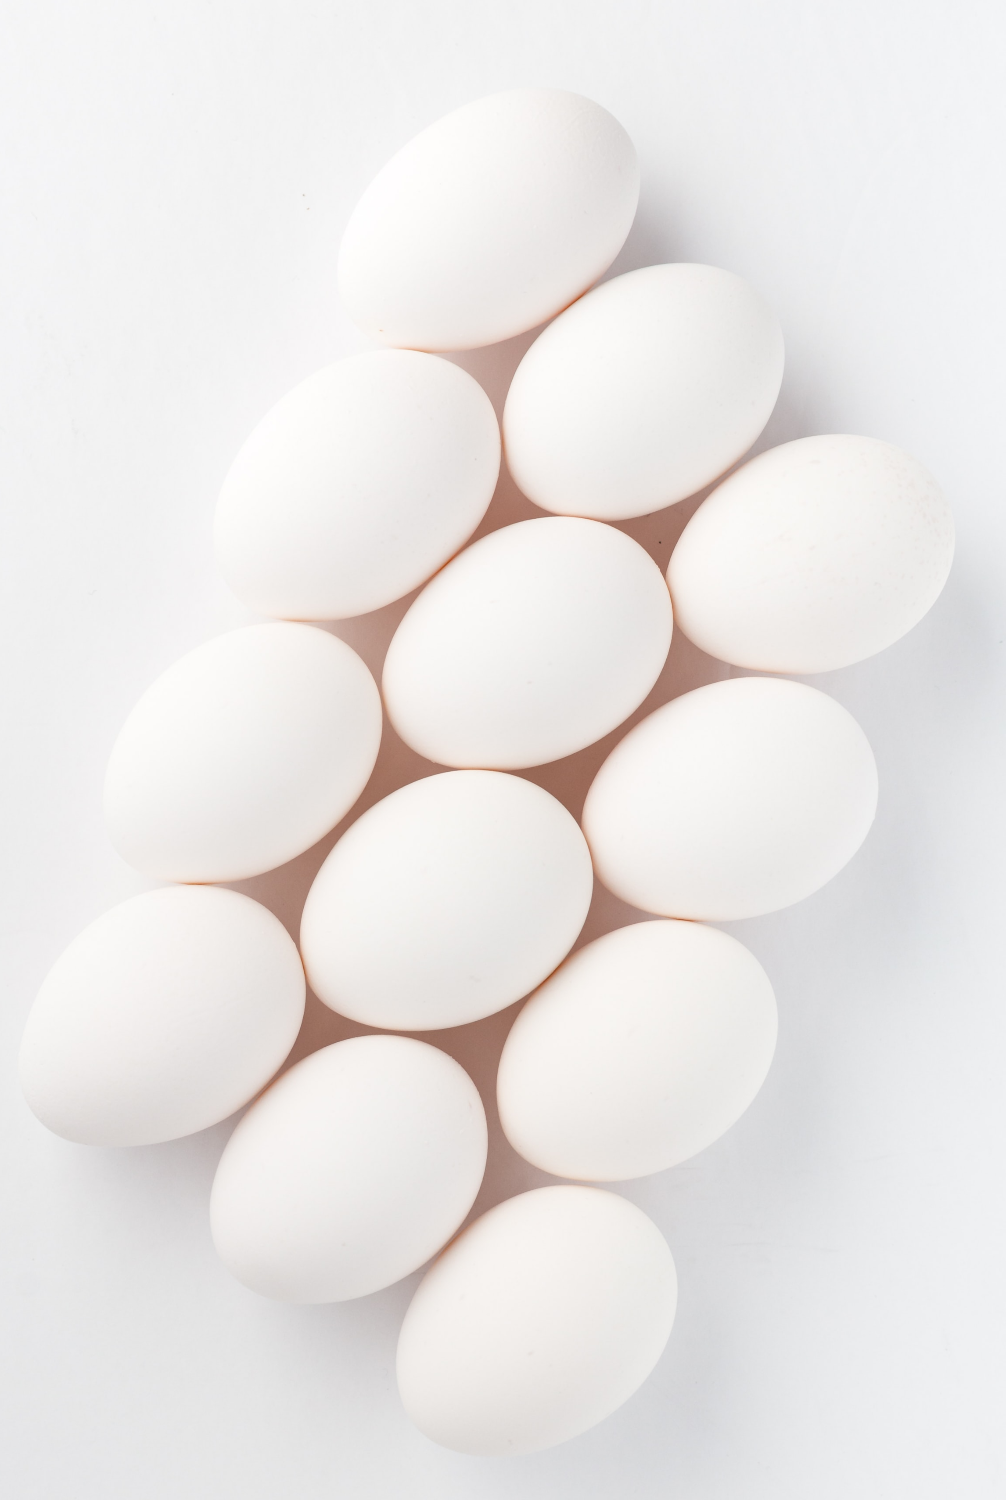 Organic Pasture Raised Large Grade Aa Eggs, 12 large eggs at Whole Foods  Market